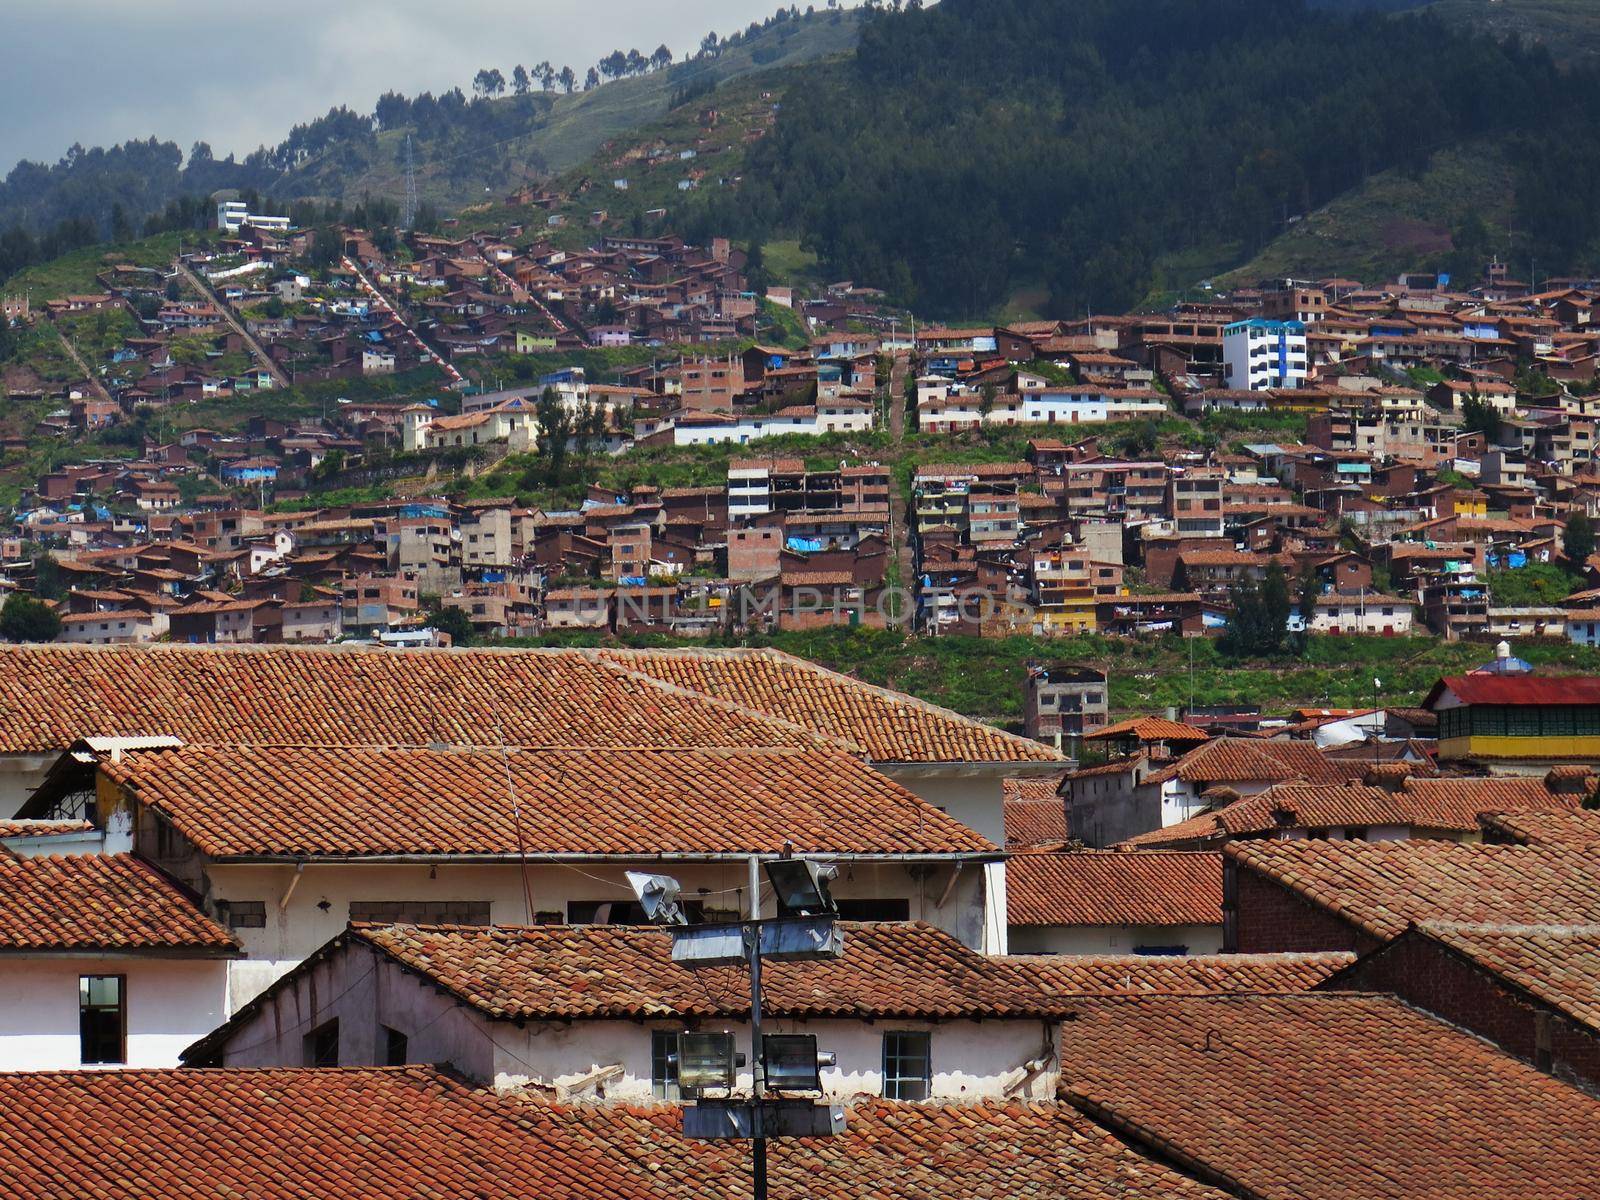 City of Cuzco in Peru by aroas